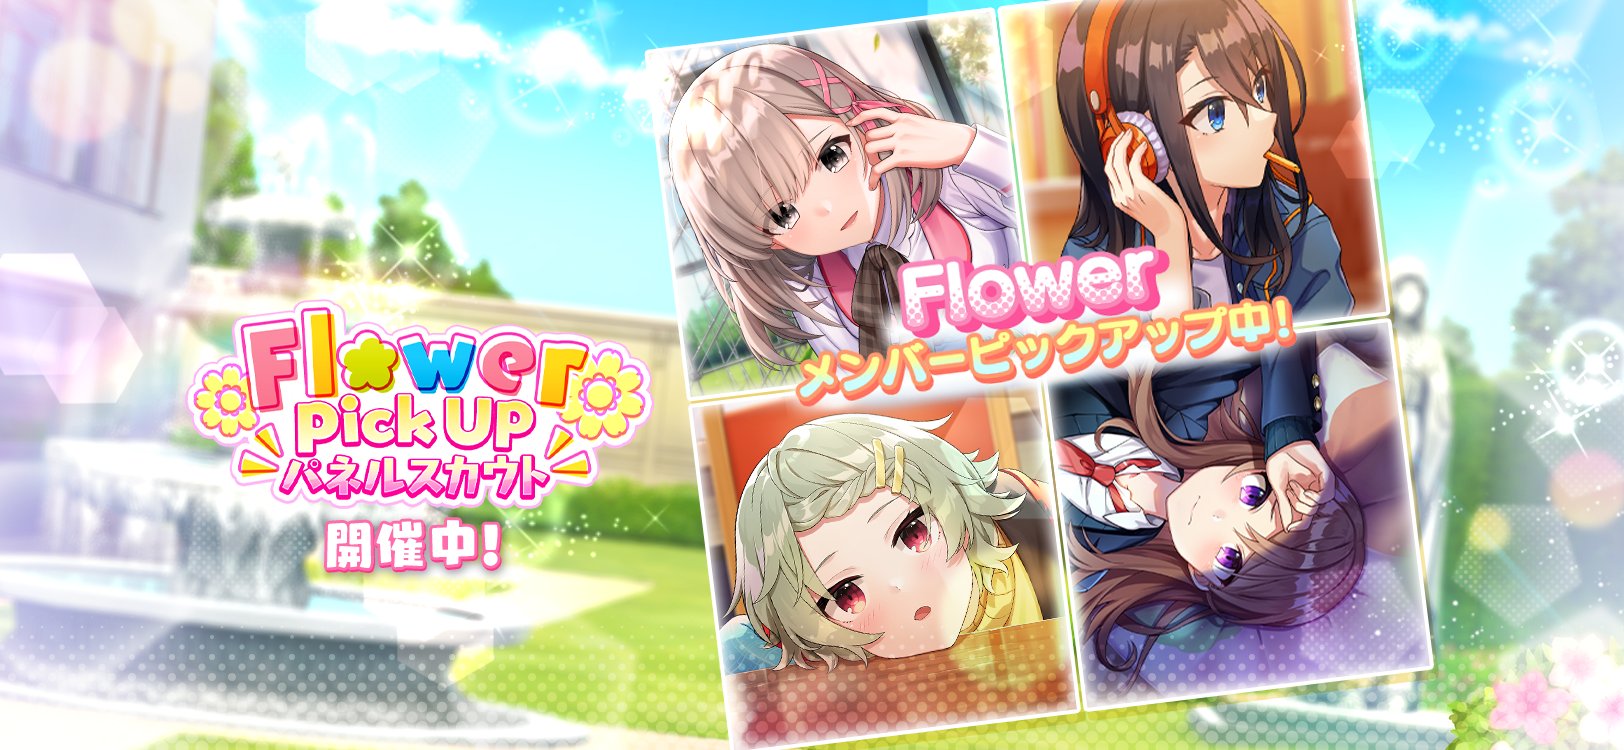 Flower PickUp 패널 스카우트.jpeg